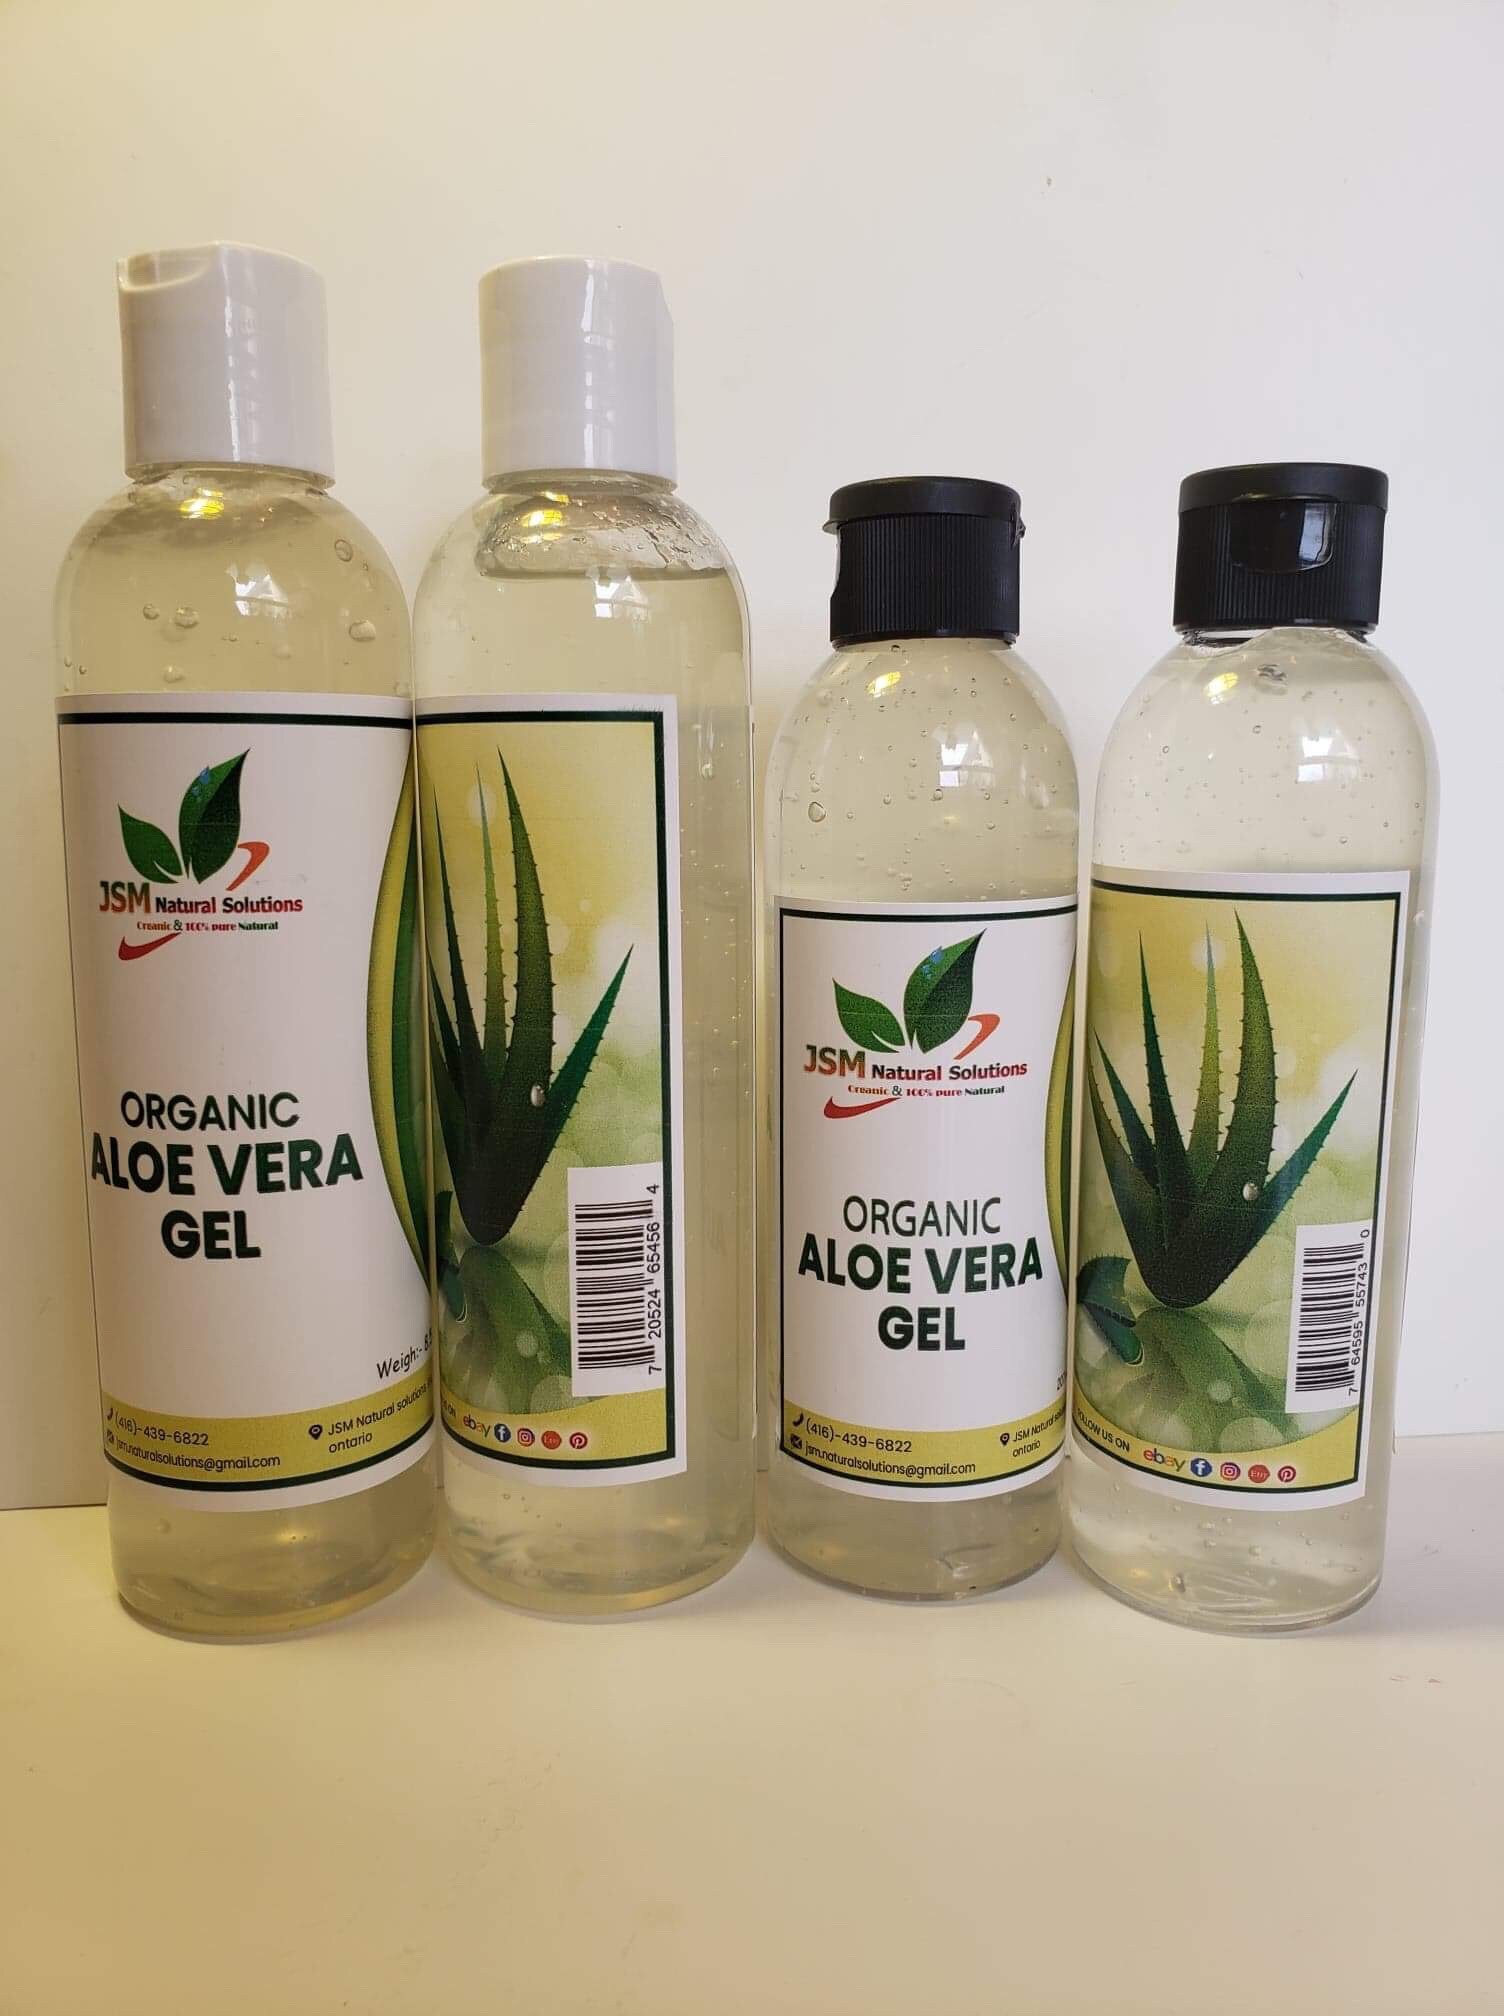 АРМ гель Organic Aloe Vera Gel 180ml. Pure and natural Aloe Vera. Крем best Aloe Vera.